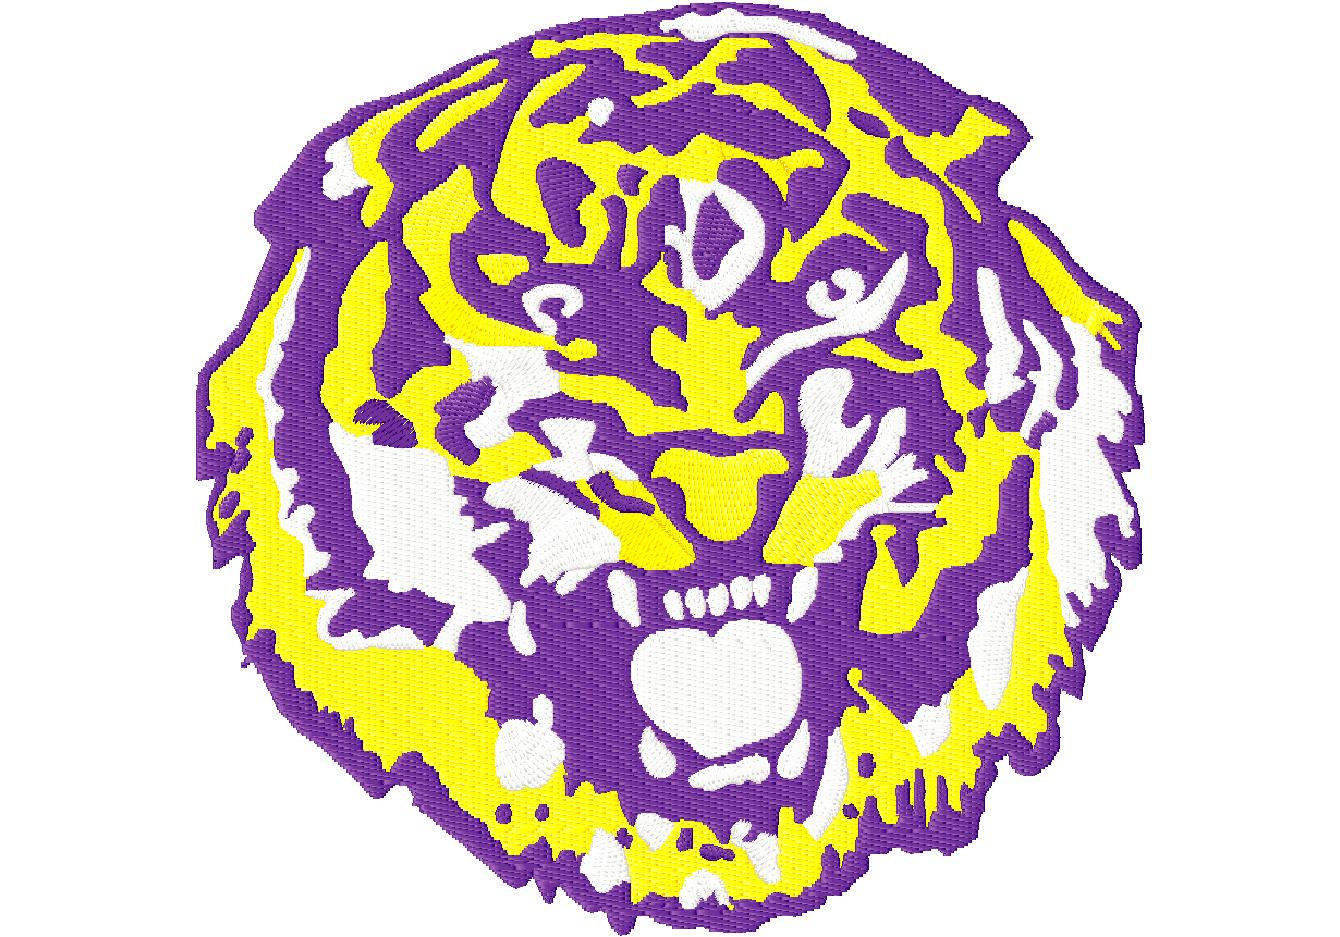 Lsu Tiger Logo - Quoteko.